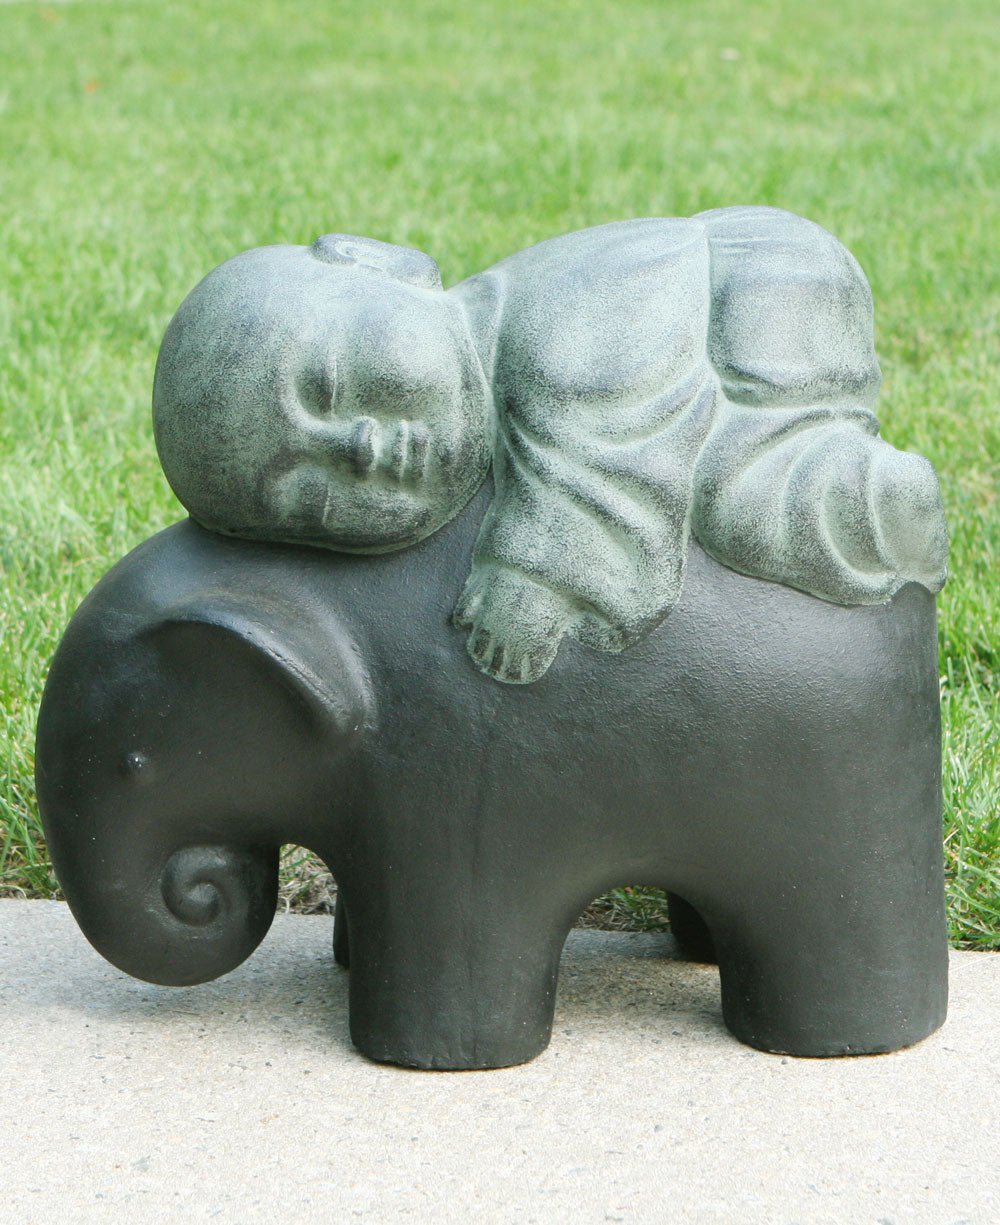 Baby Monk and Elephant Garden Statue - Sculptures & Statues